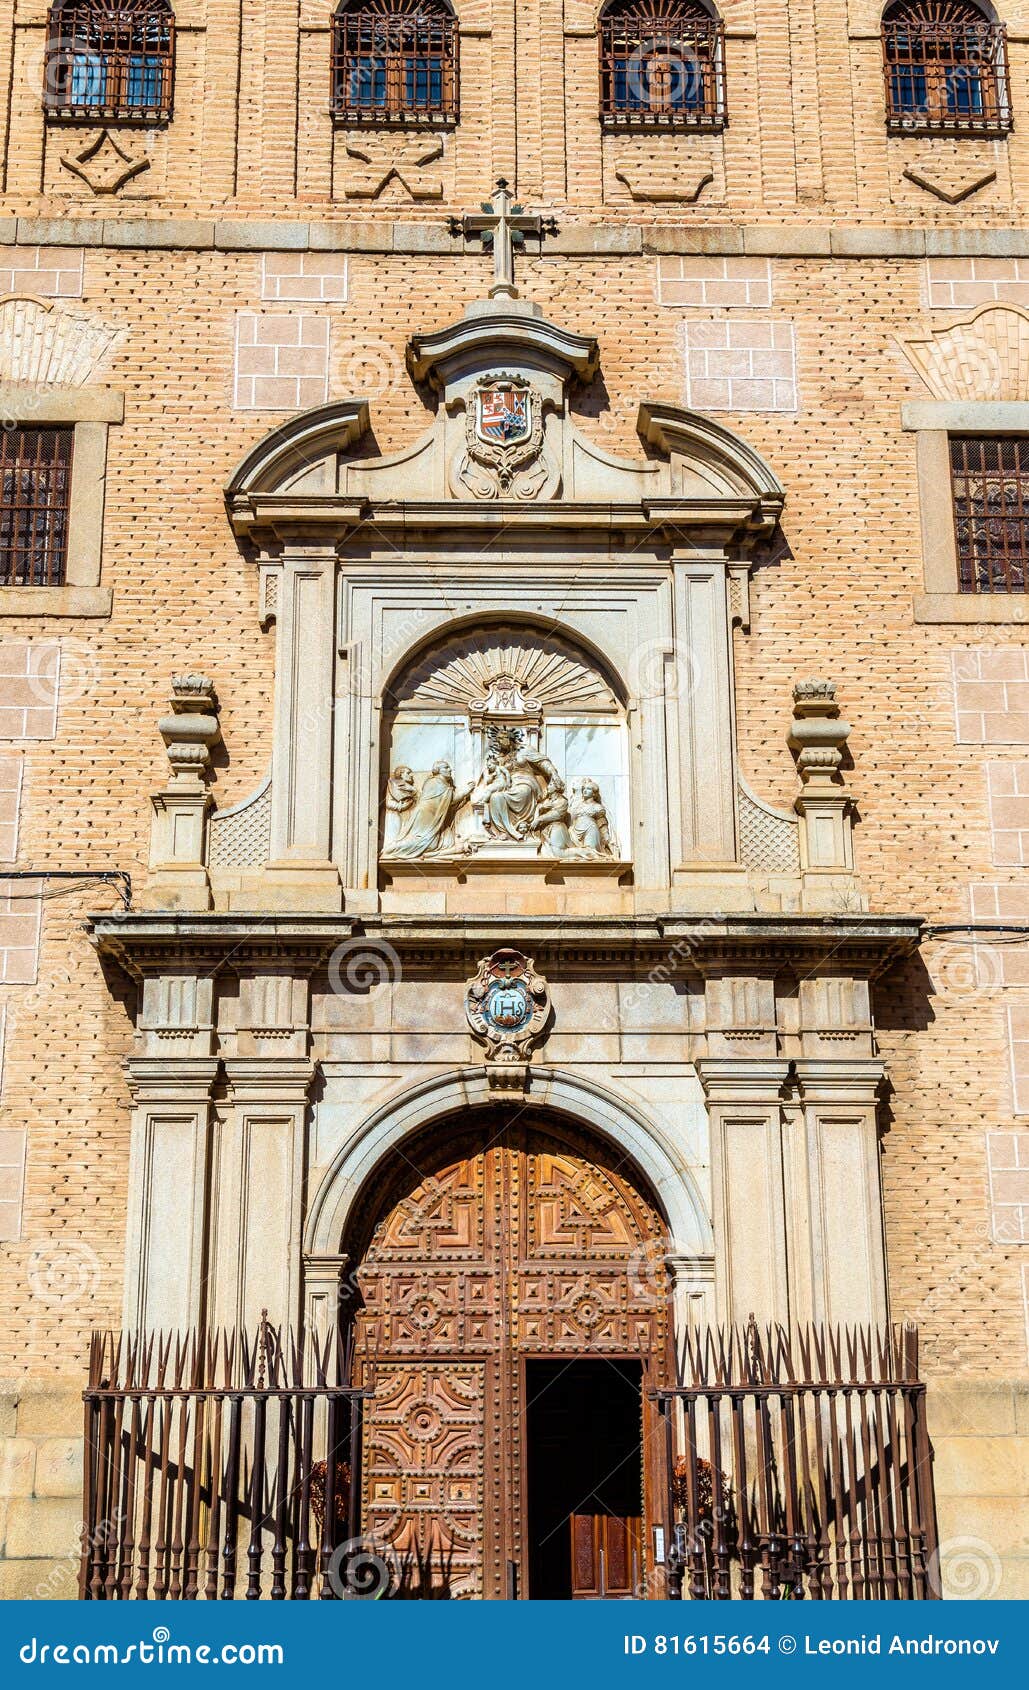 colegio de doncellas nobles, a school for girls founded in 1551 - toledo, spain